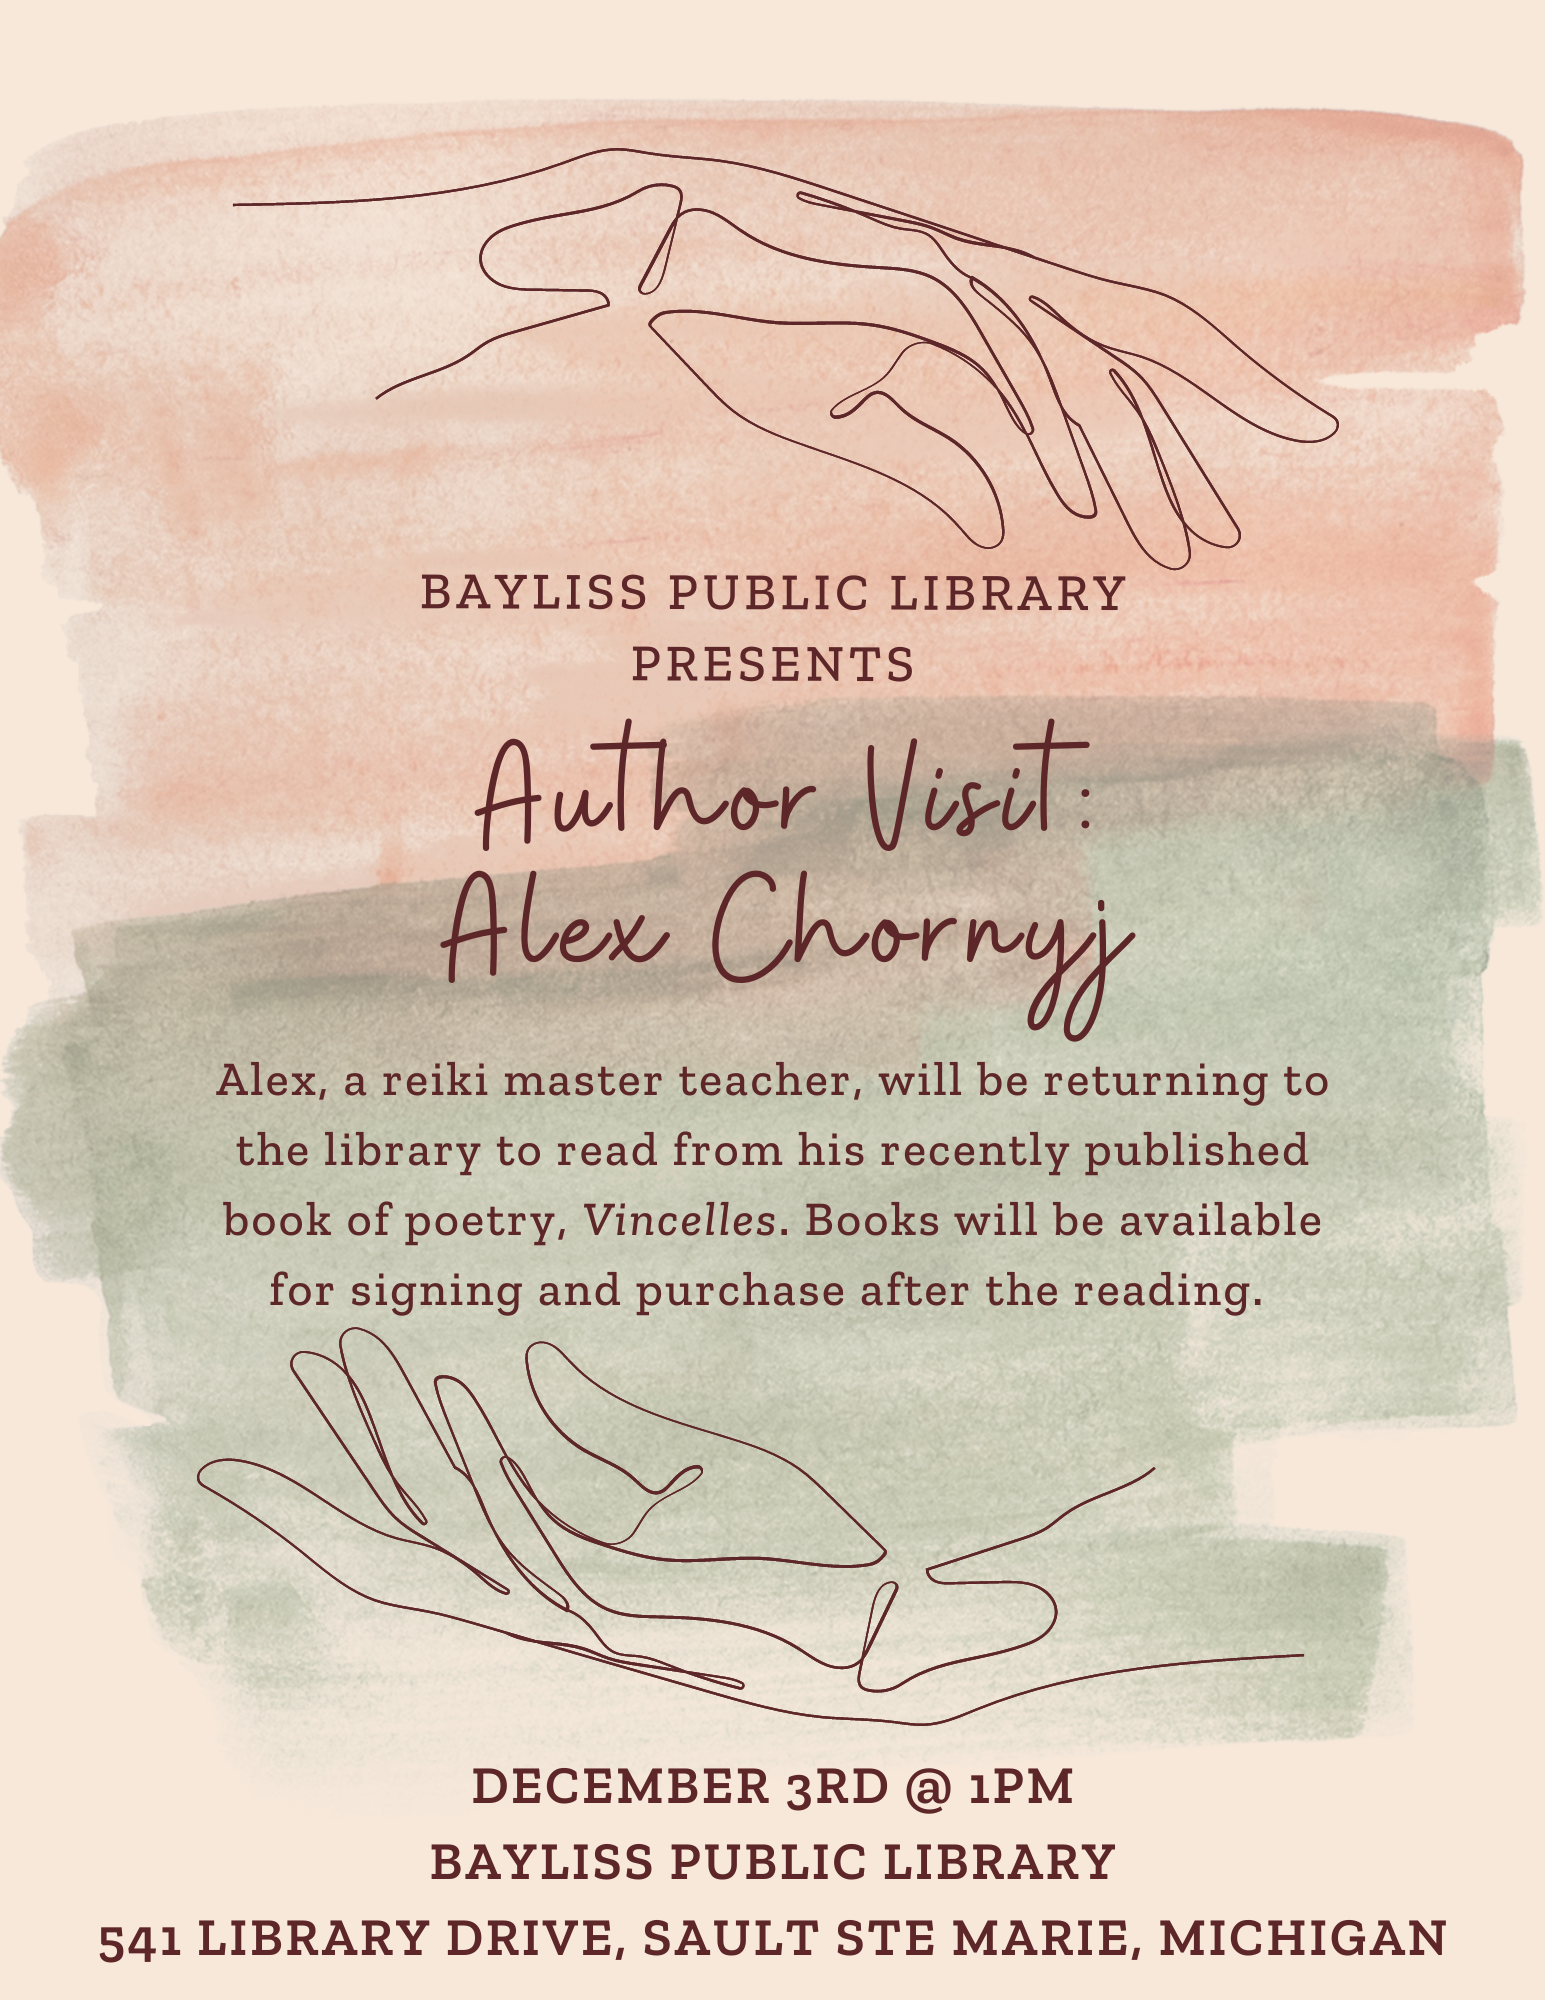 alex chornjy visits bayliss public library